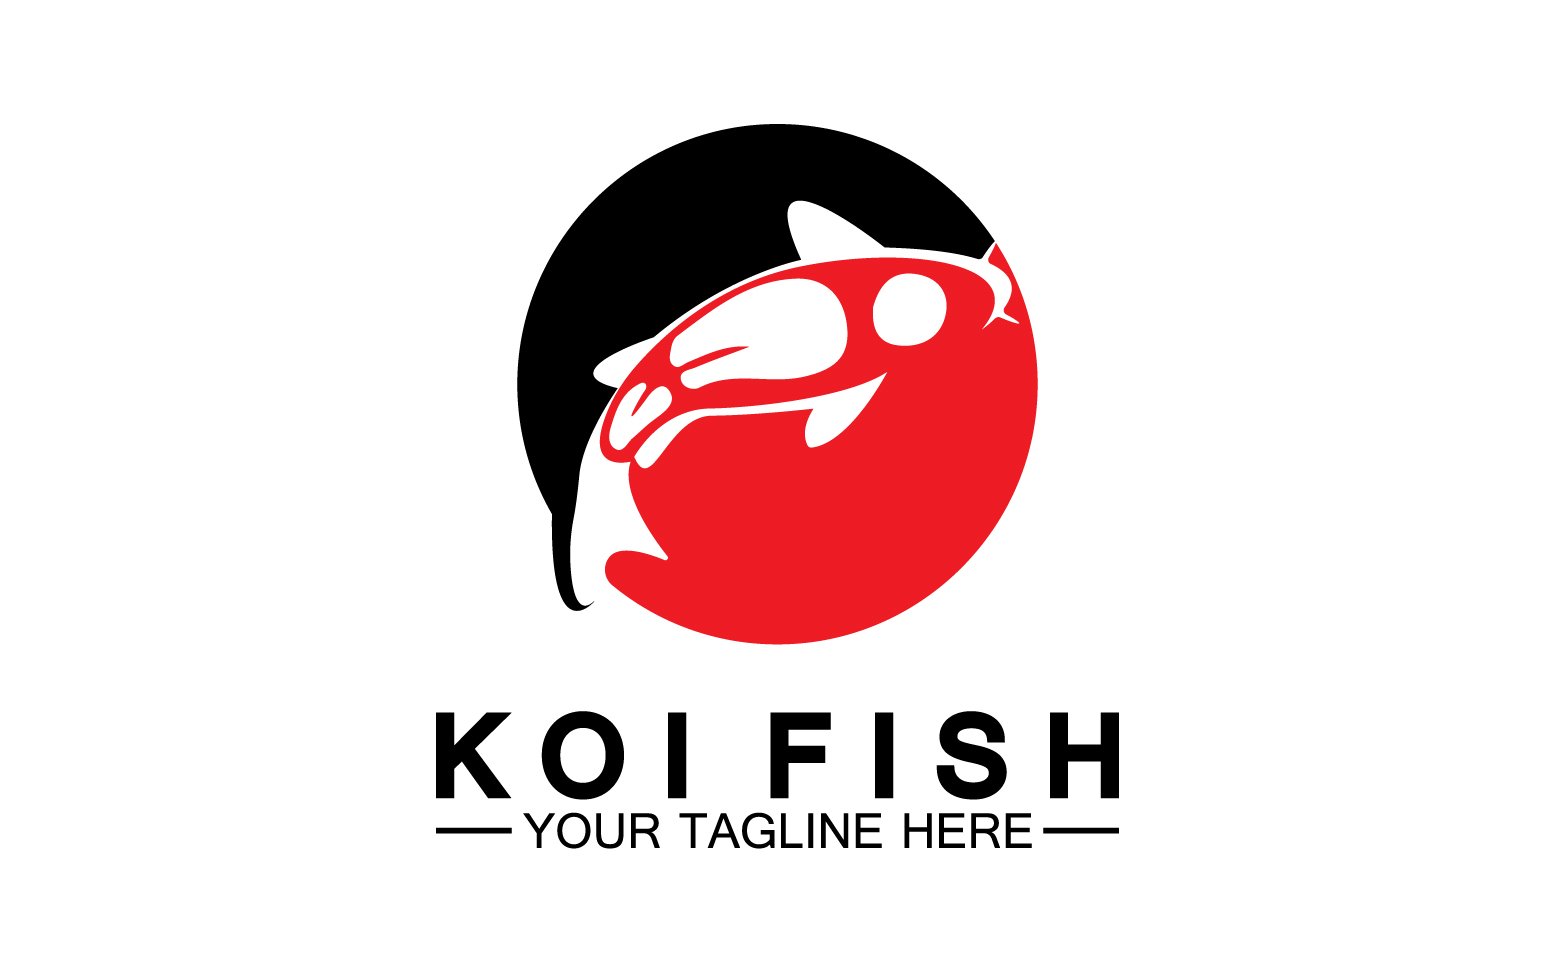 Fish koi black and red icon logo vector v32